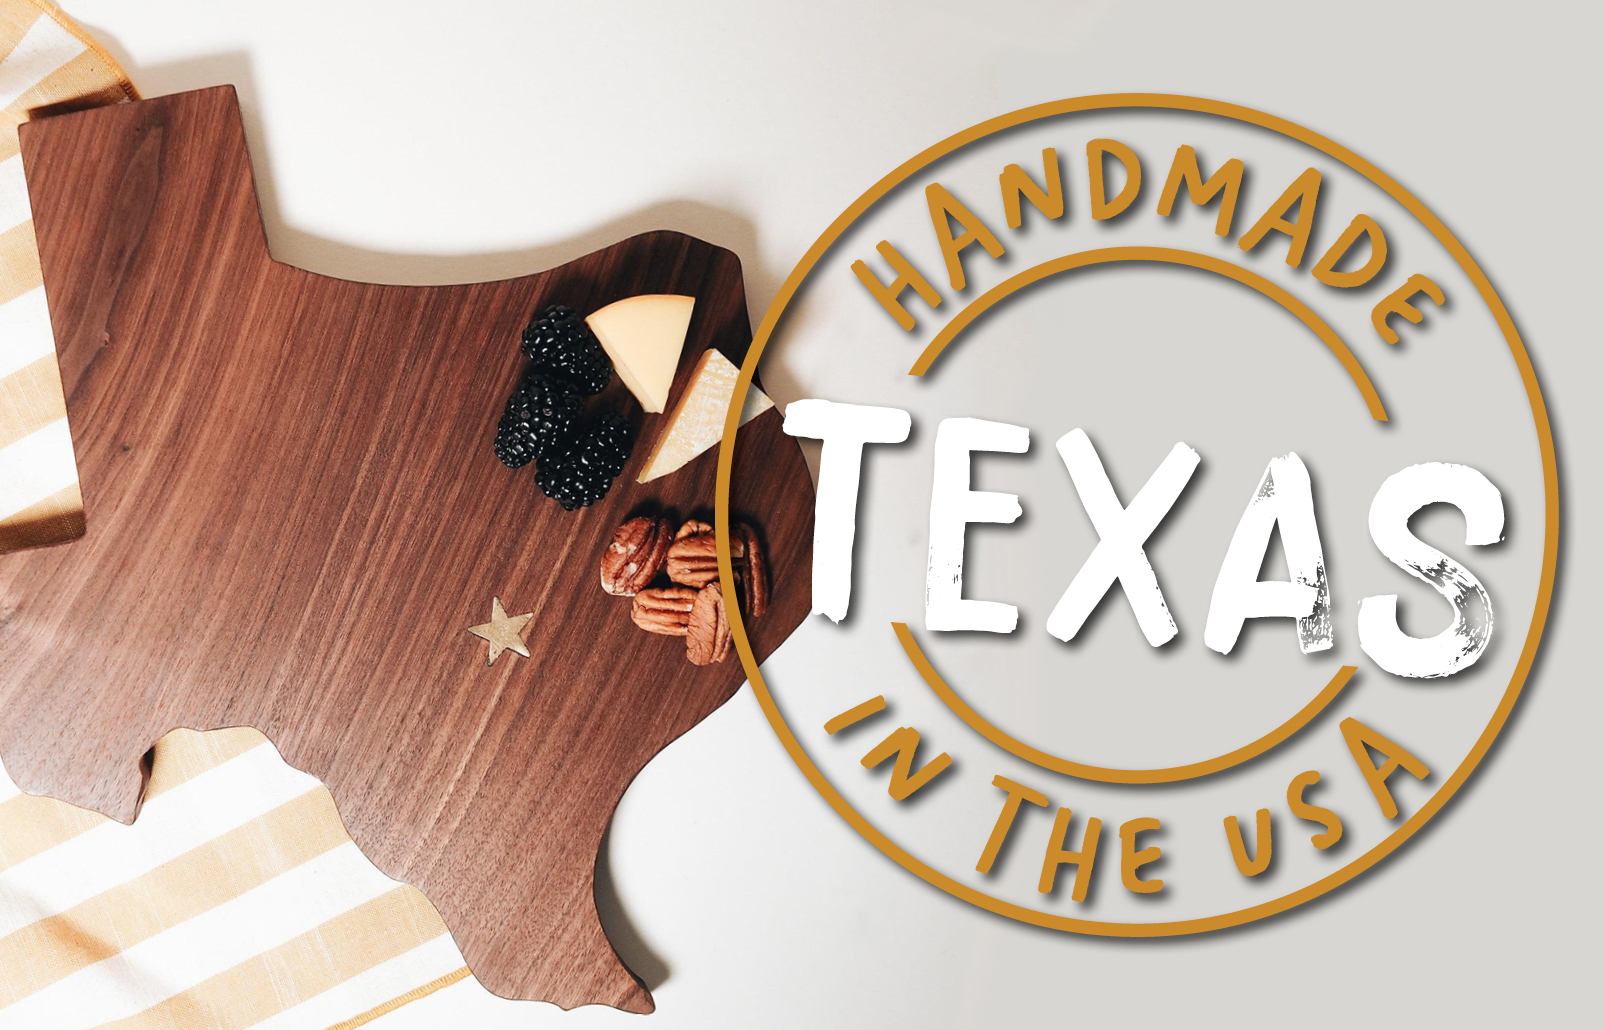 Shop Local: Handmade in Texas